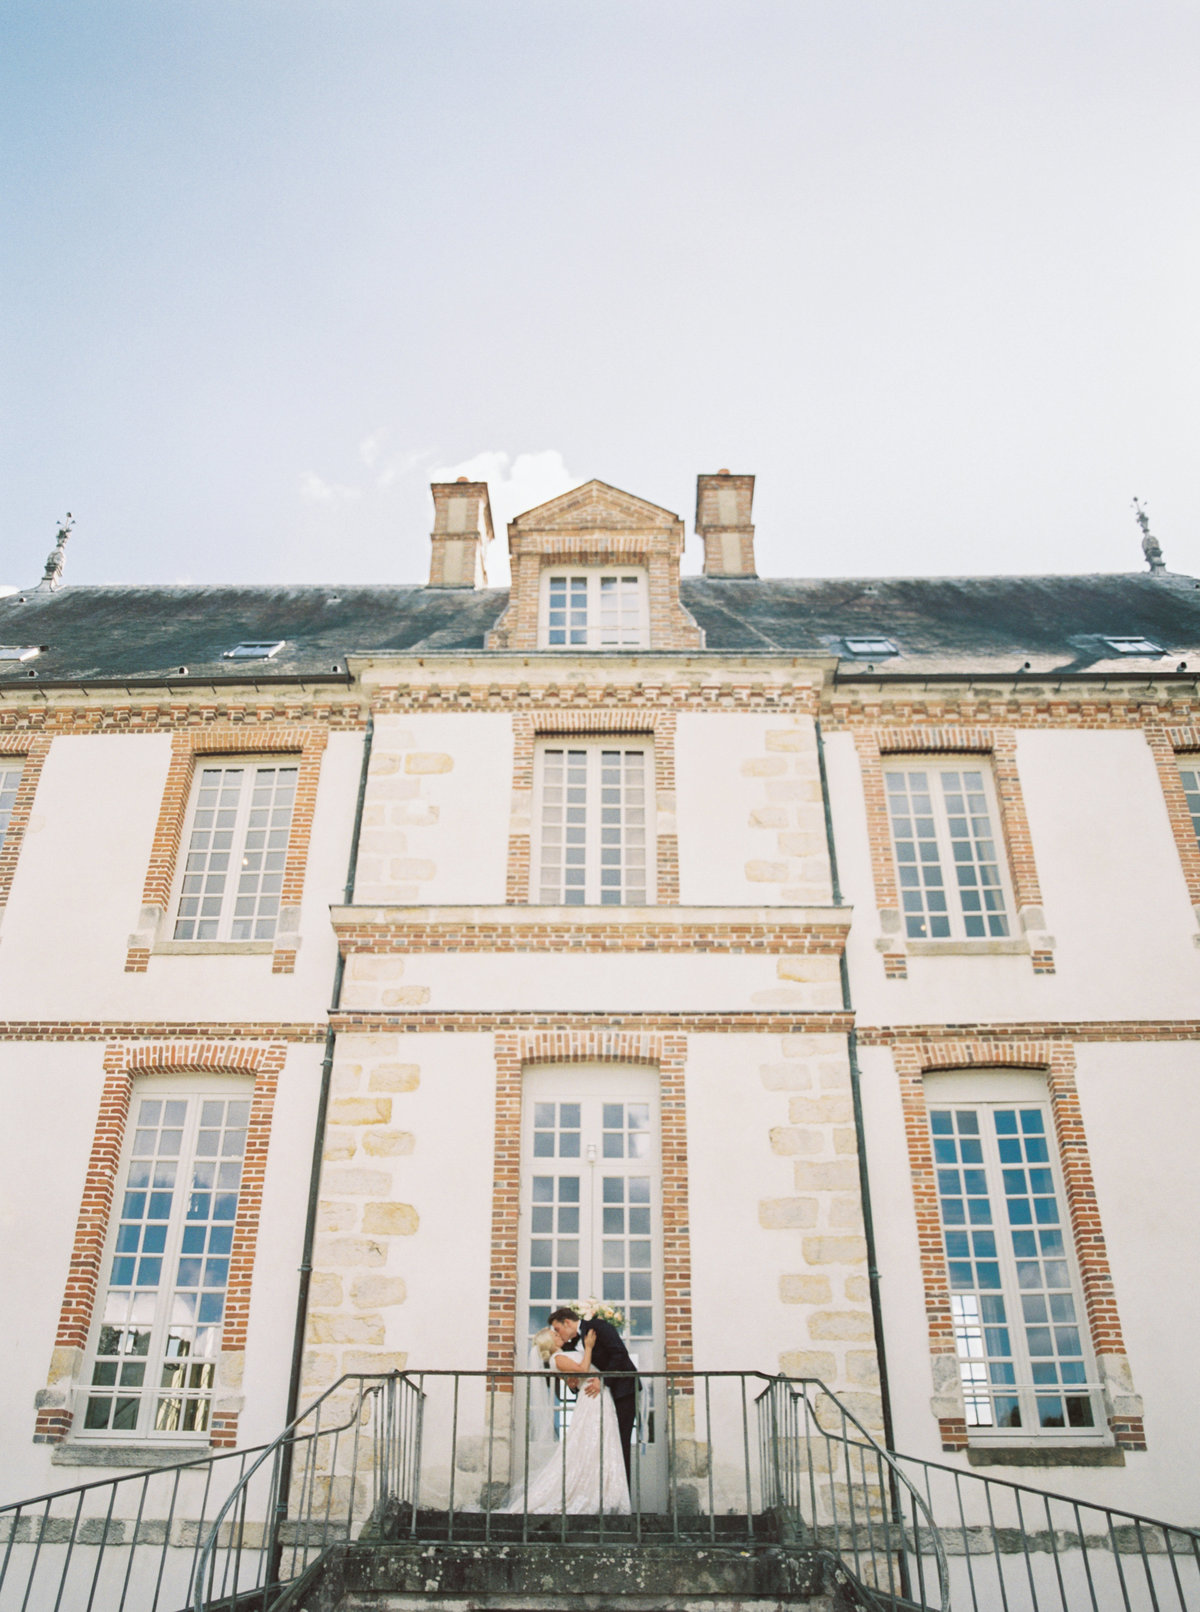 Rachael & Cameron | Paris, France Wedding | Mary Claire Photography | Arizona & Destination Fine Art Wedding Photographer